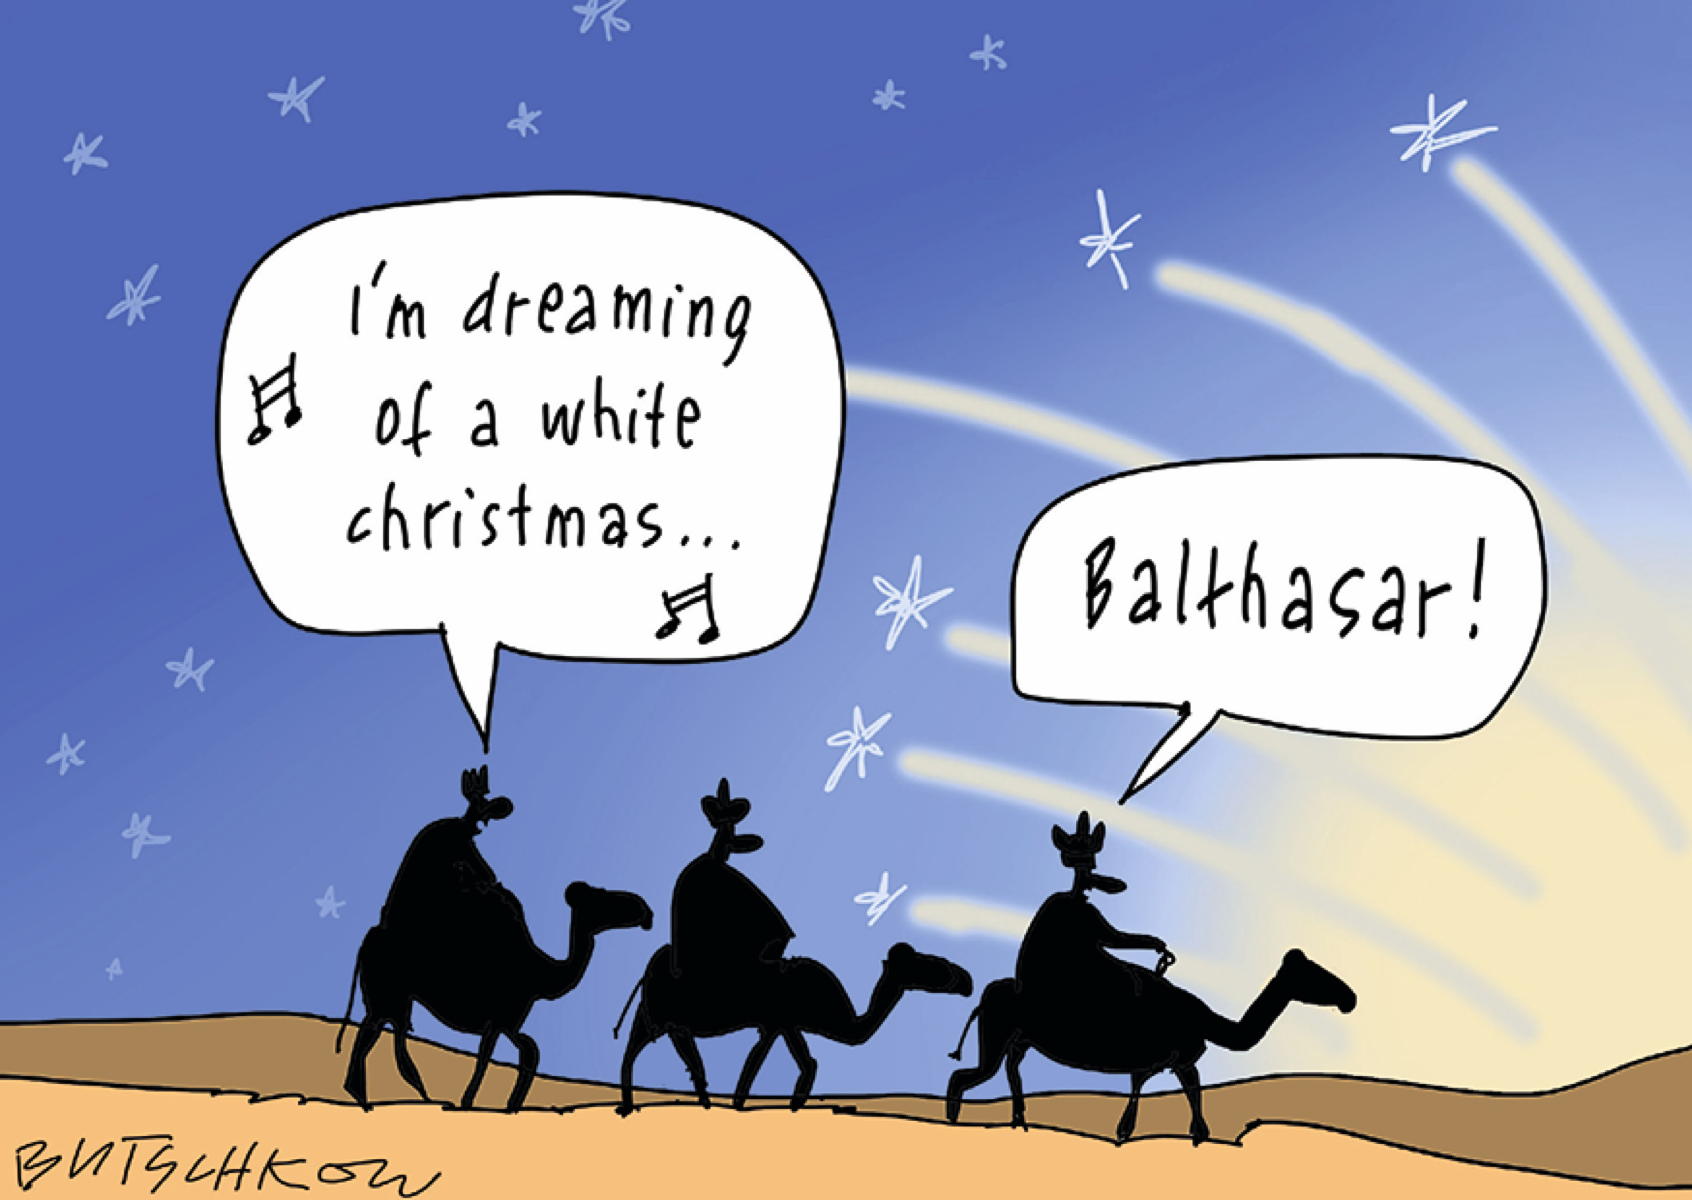 I'm dreaming of white Christmas